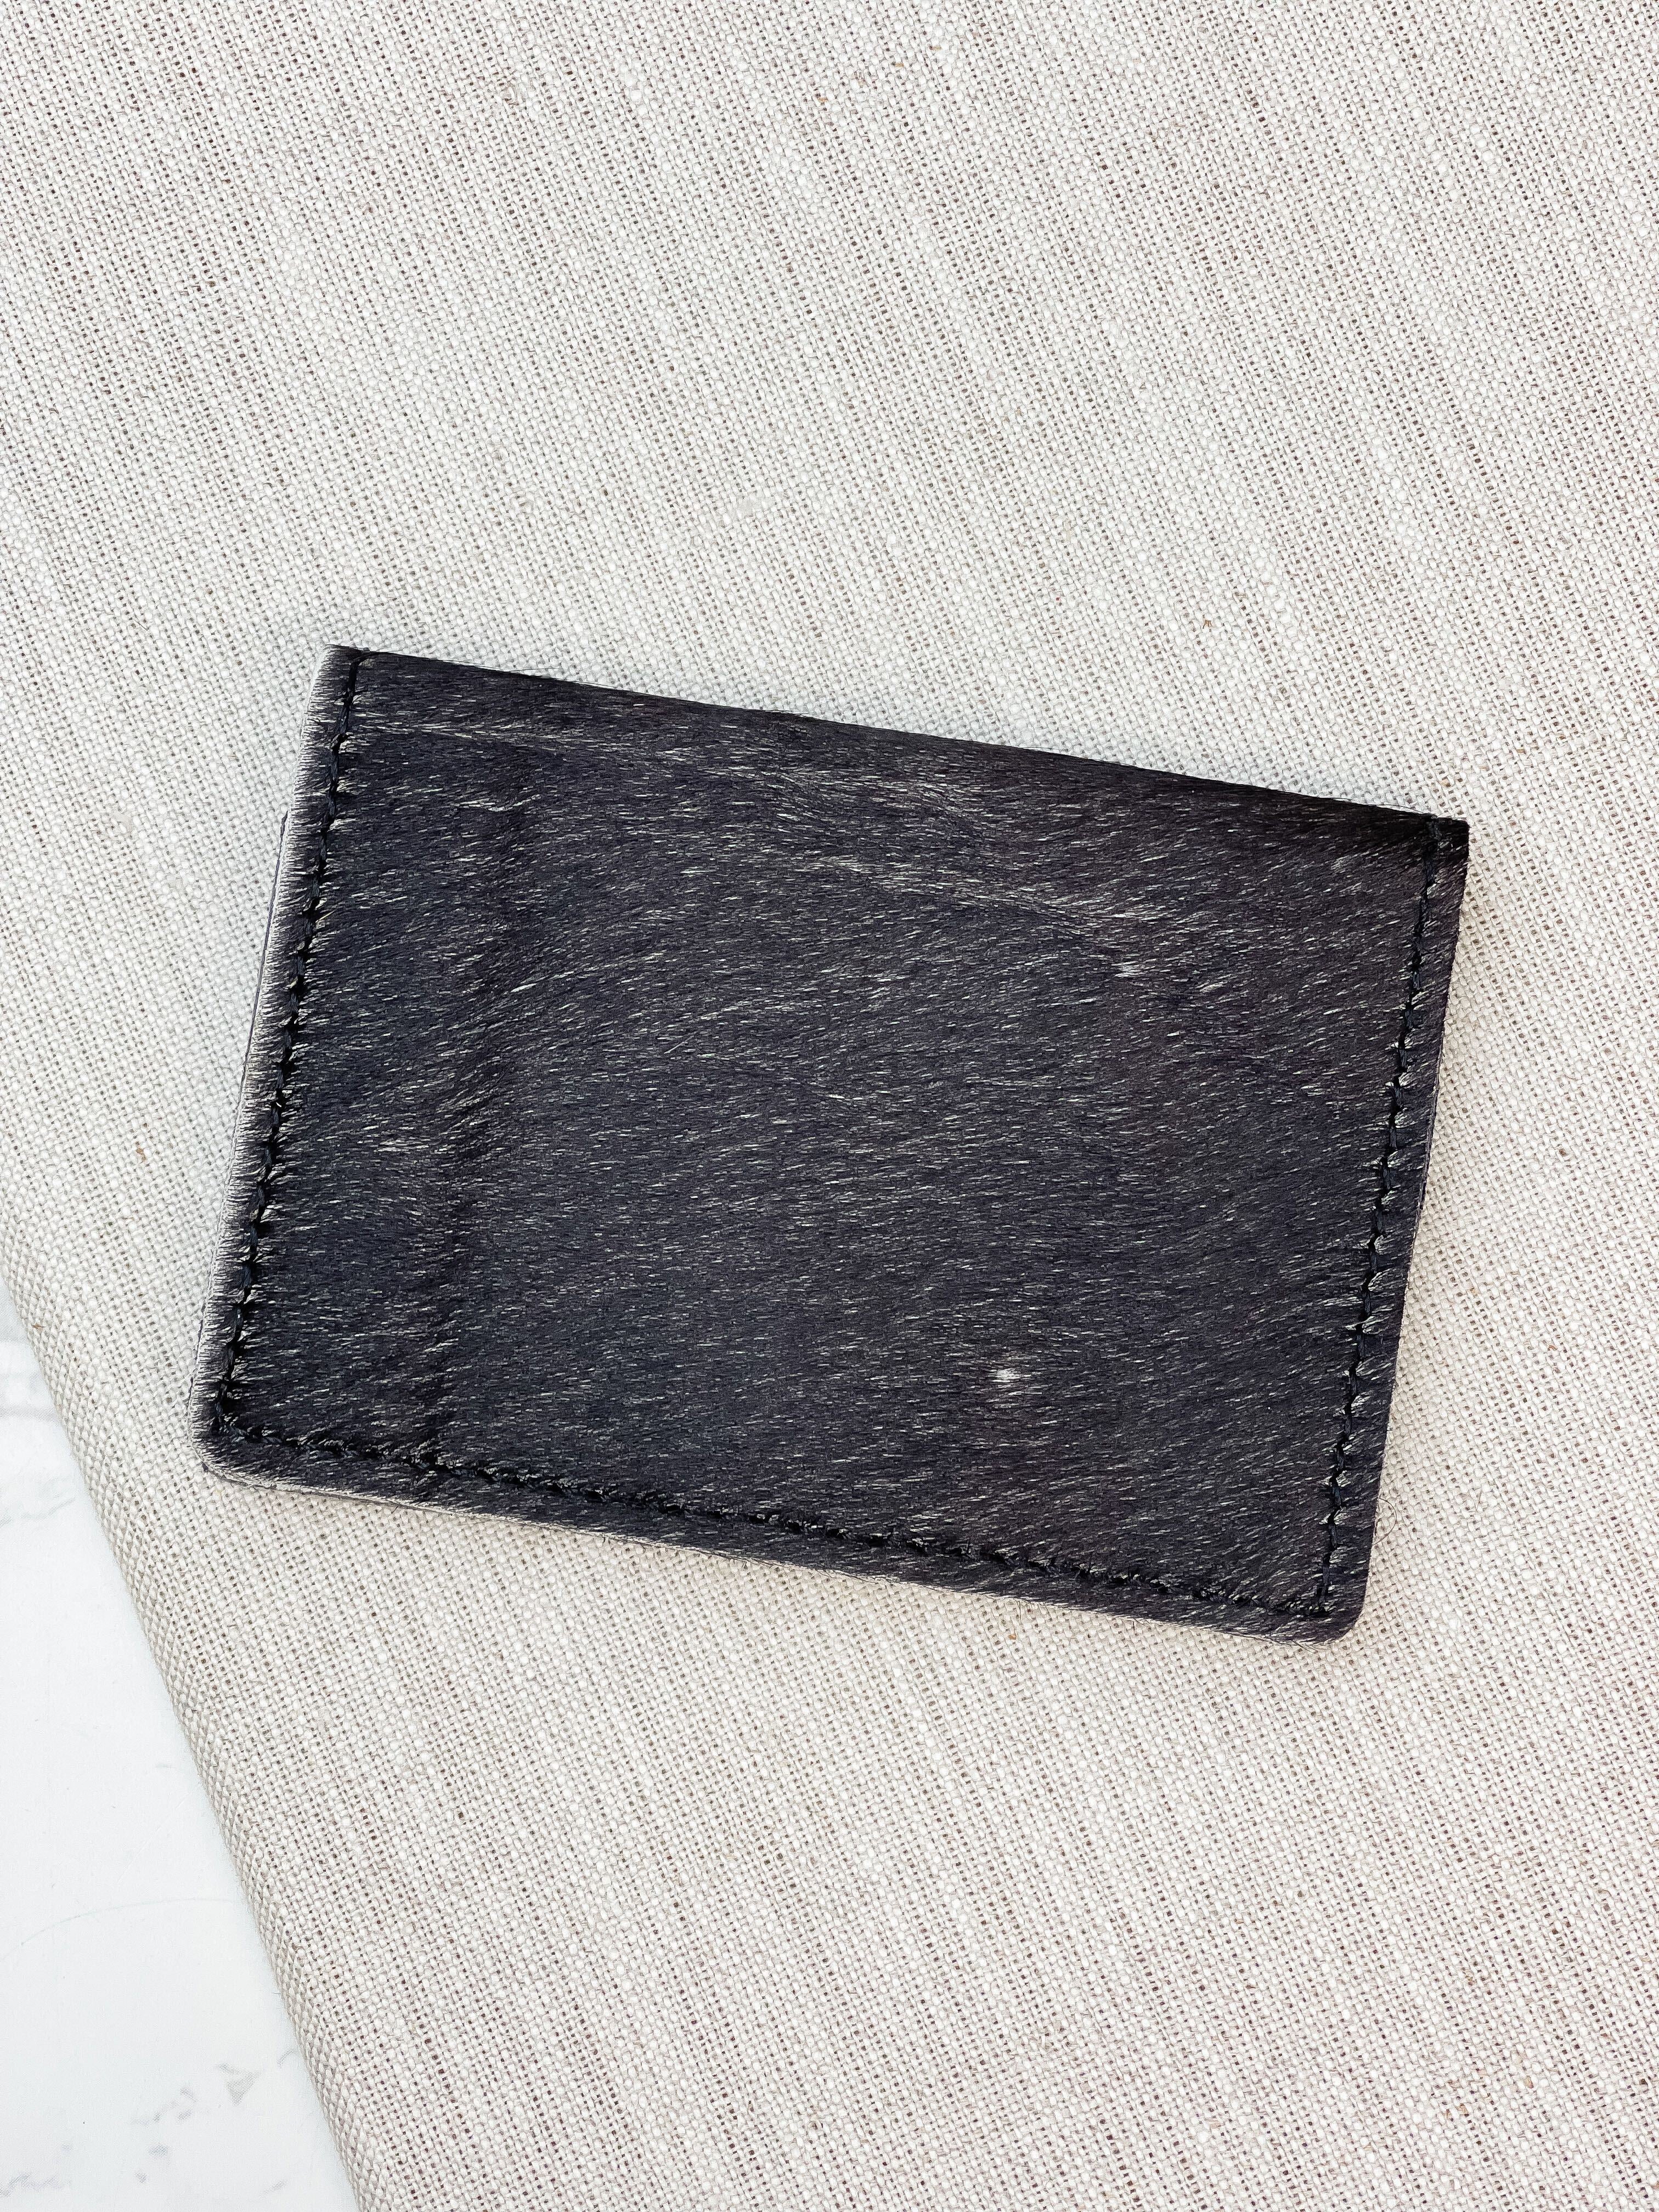 Leather Credit Card Holder - Black & White